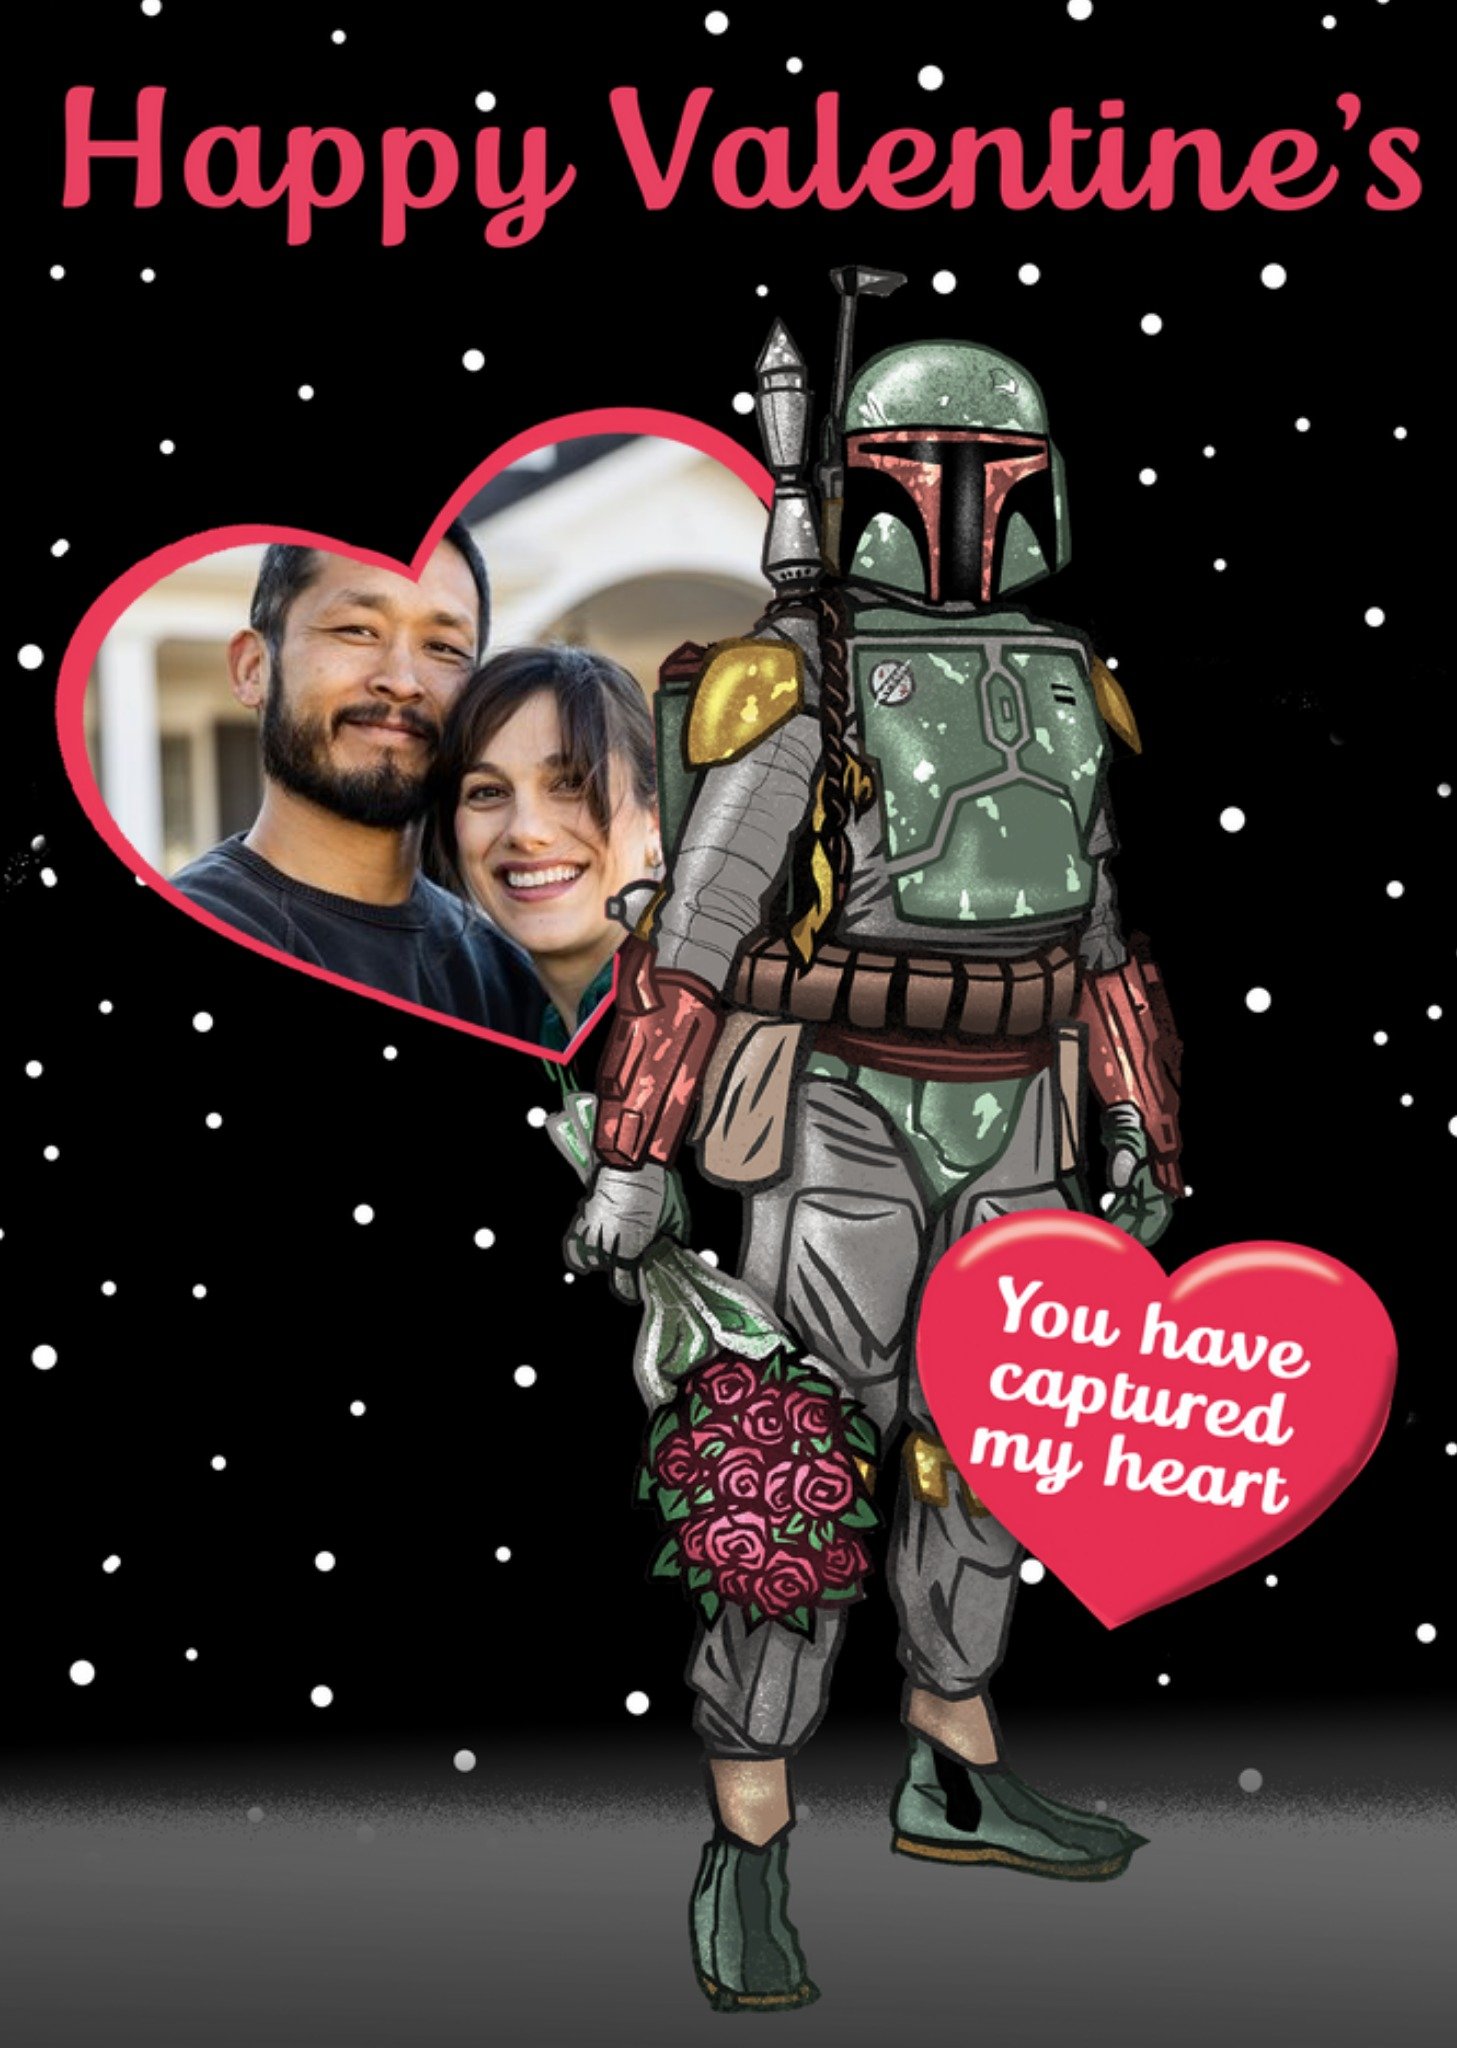 Disney Star Wars Boba Fett Happy Valentines Photo Upload Card, Large